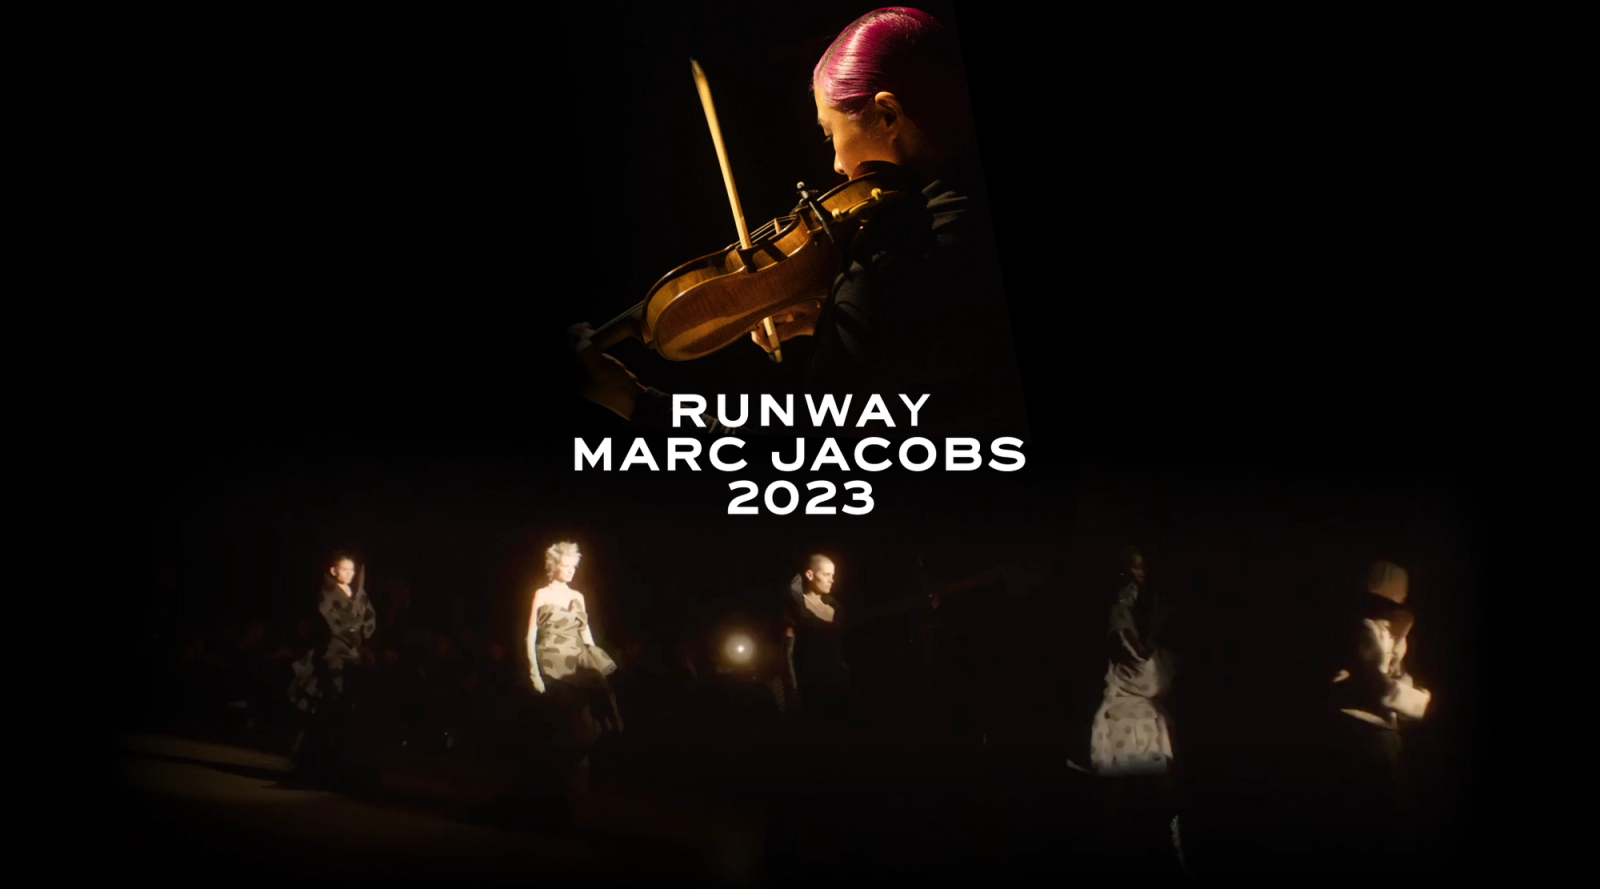 marc jacobs fashionshow runway 2023 